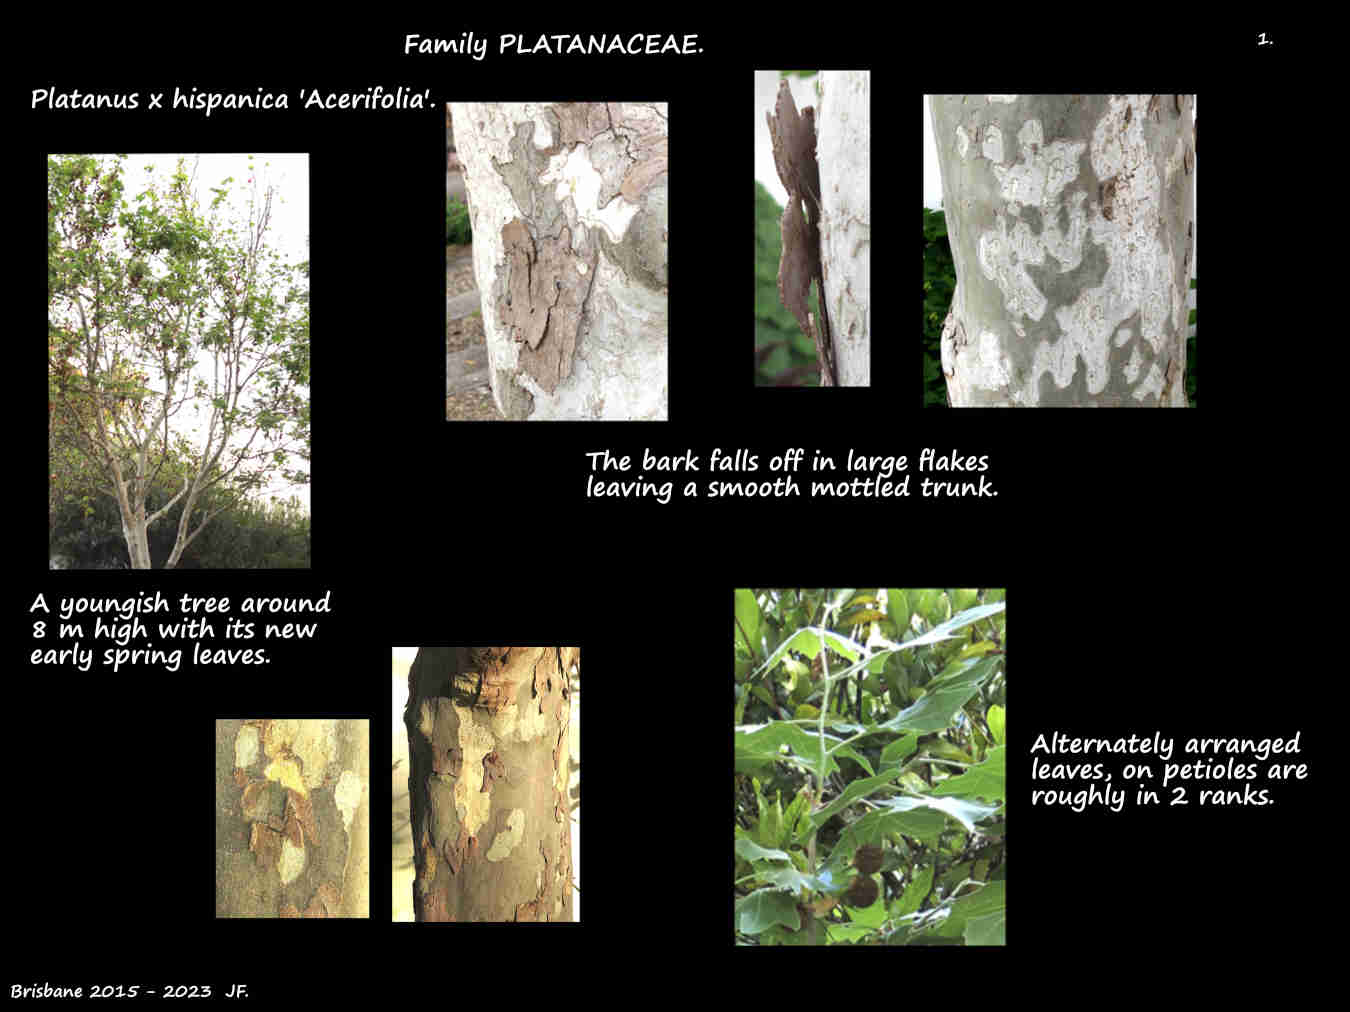 1 Platanus x hispanica 'Acerifolia' tree & bark